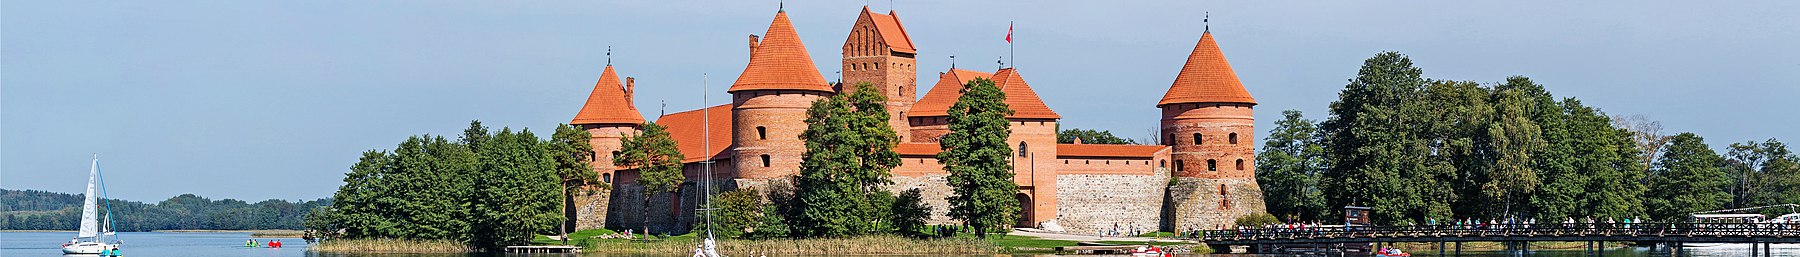 Istana Pulau Trakai, Lithuania - Diliff banner.jpg